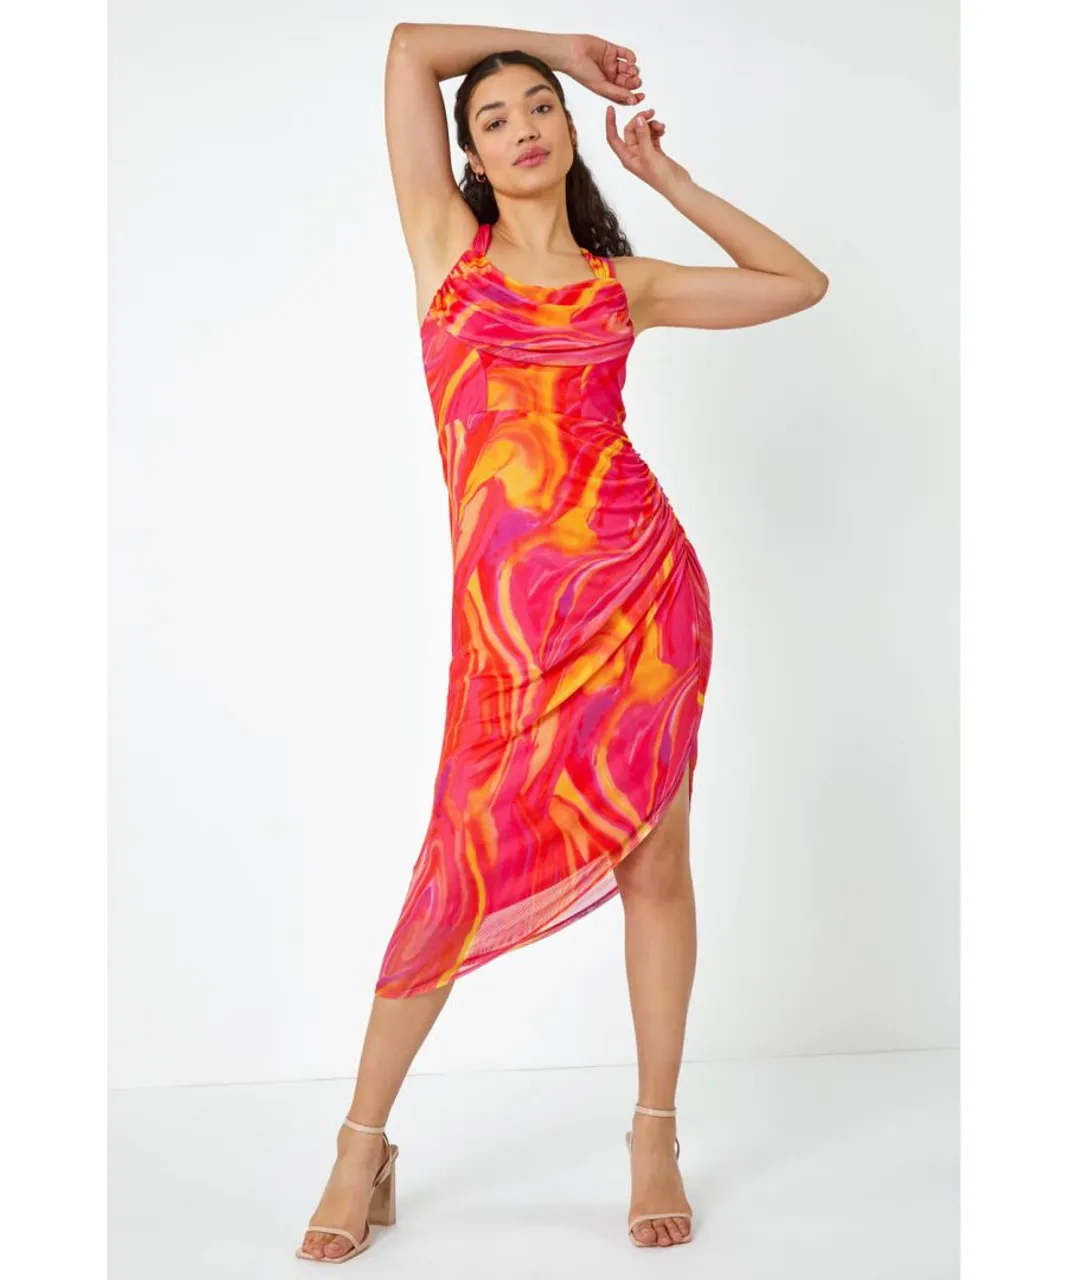 Dusk Womens Swirl Print Ruched Stretch Dress - Pink